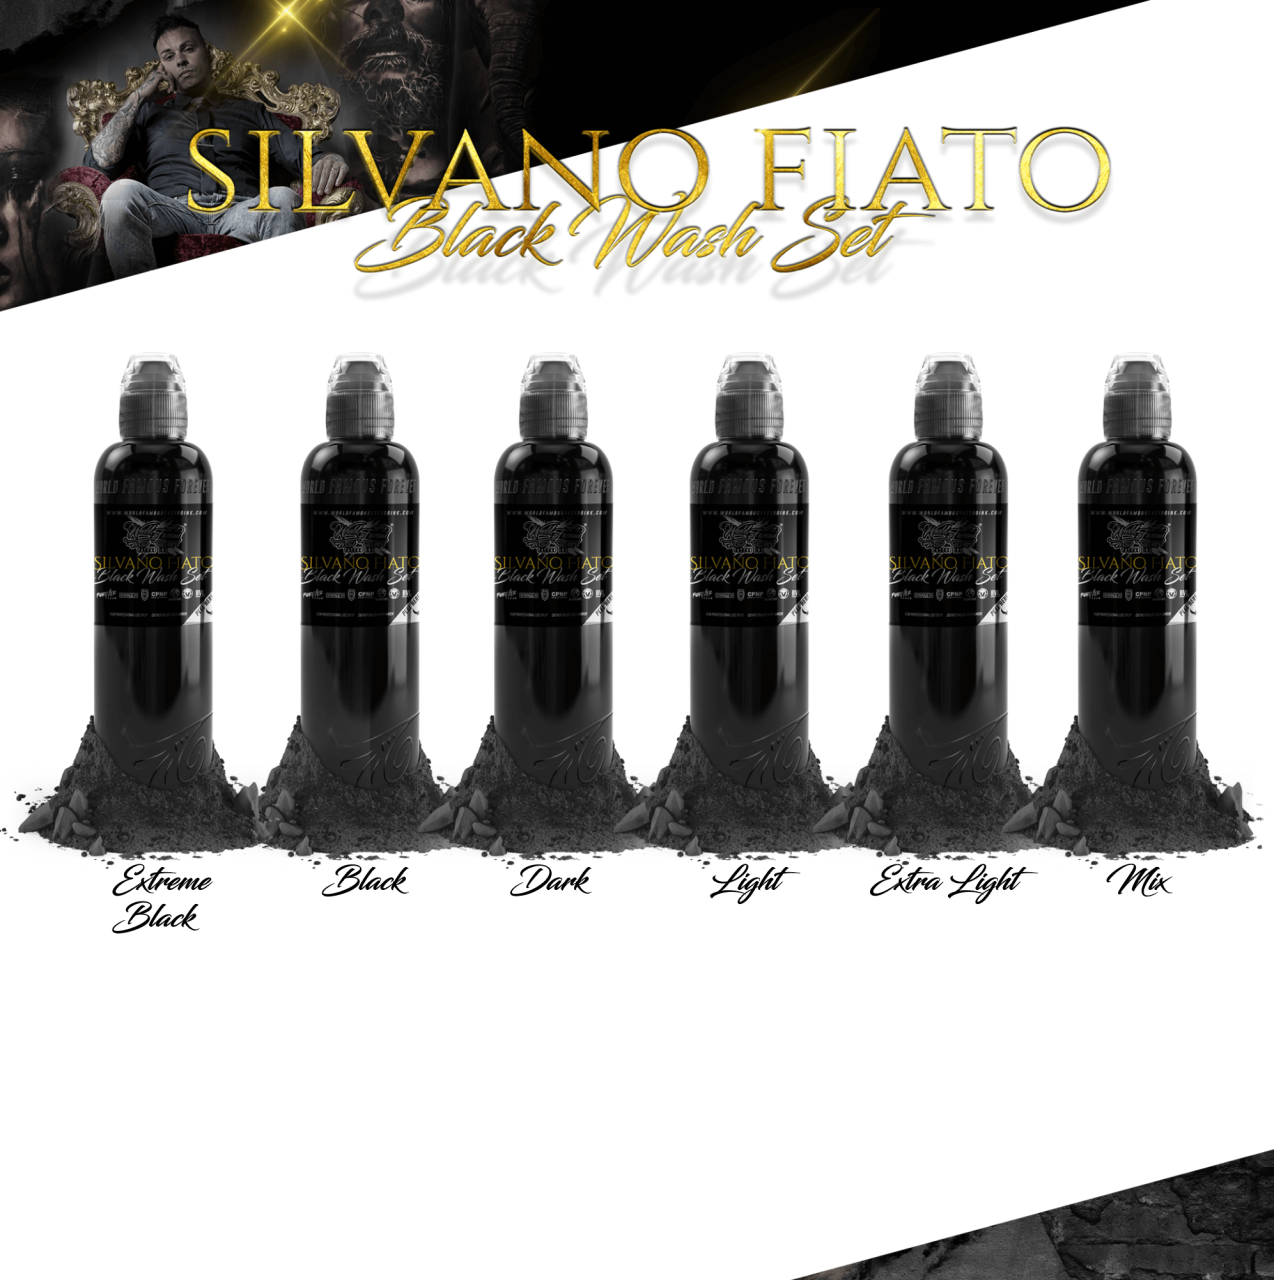 World Famous Ink Silvano Fiato Black Wash Siyah Boya Seti Dövme Boyası 1 oz 30 ml